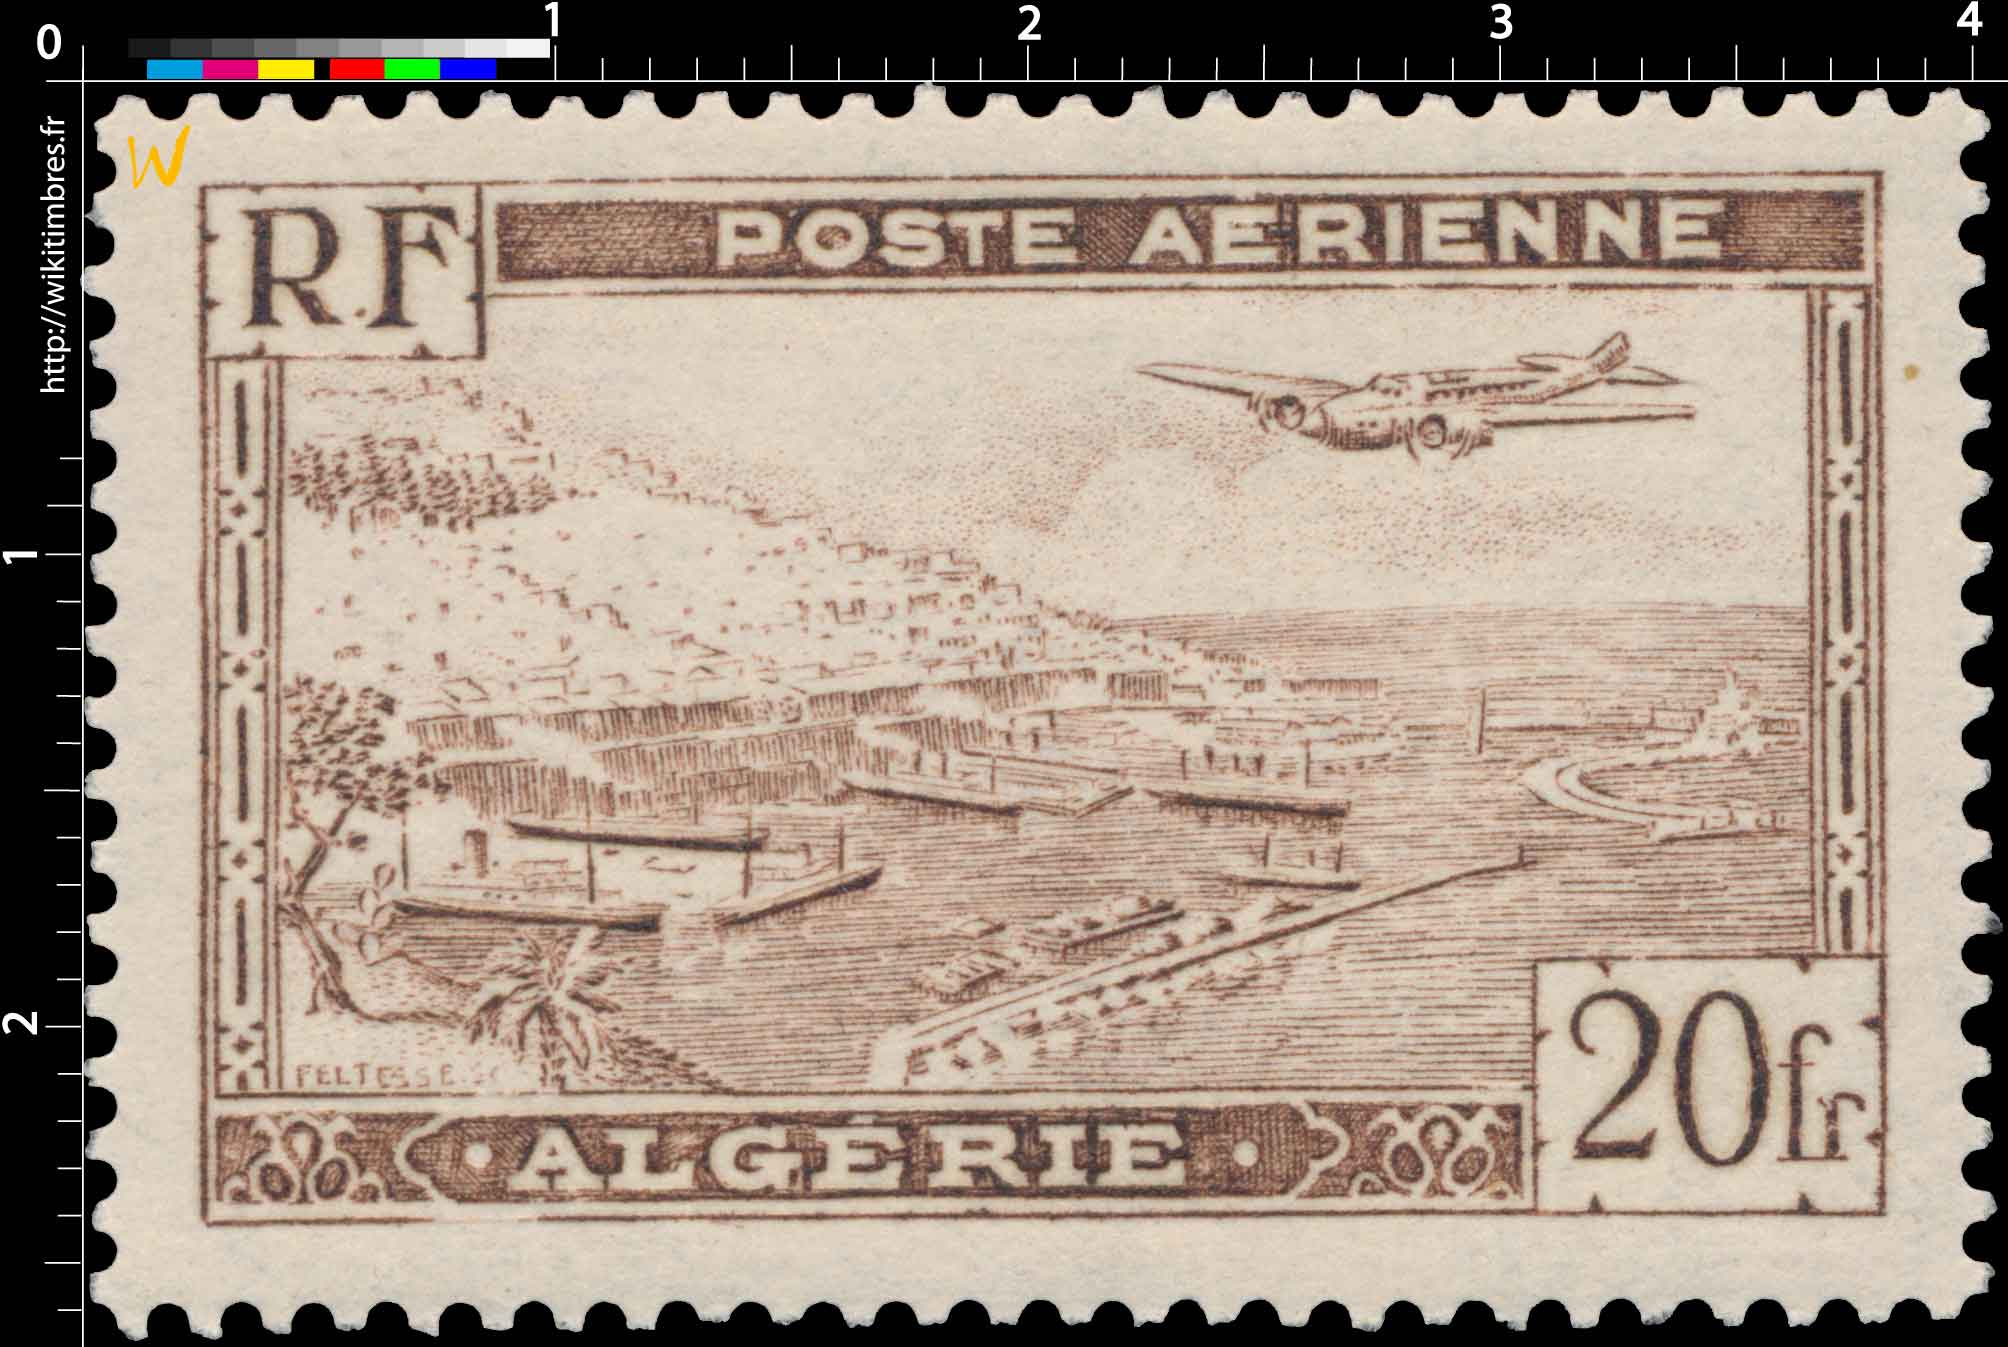 Algérie - Avion survolant la rade d'Alger